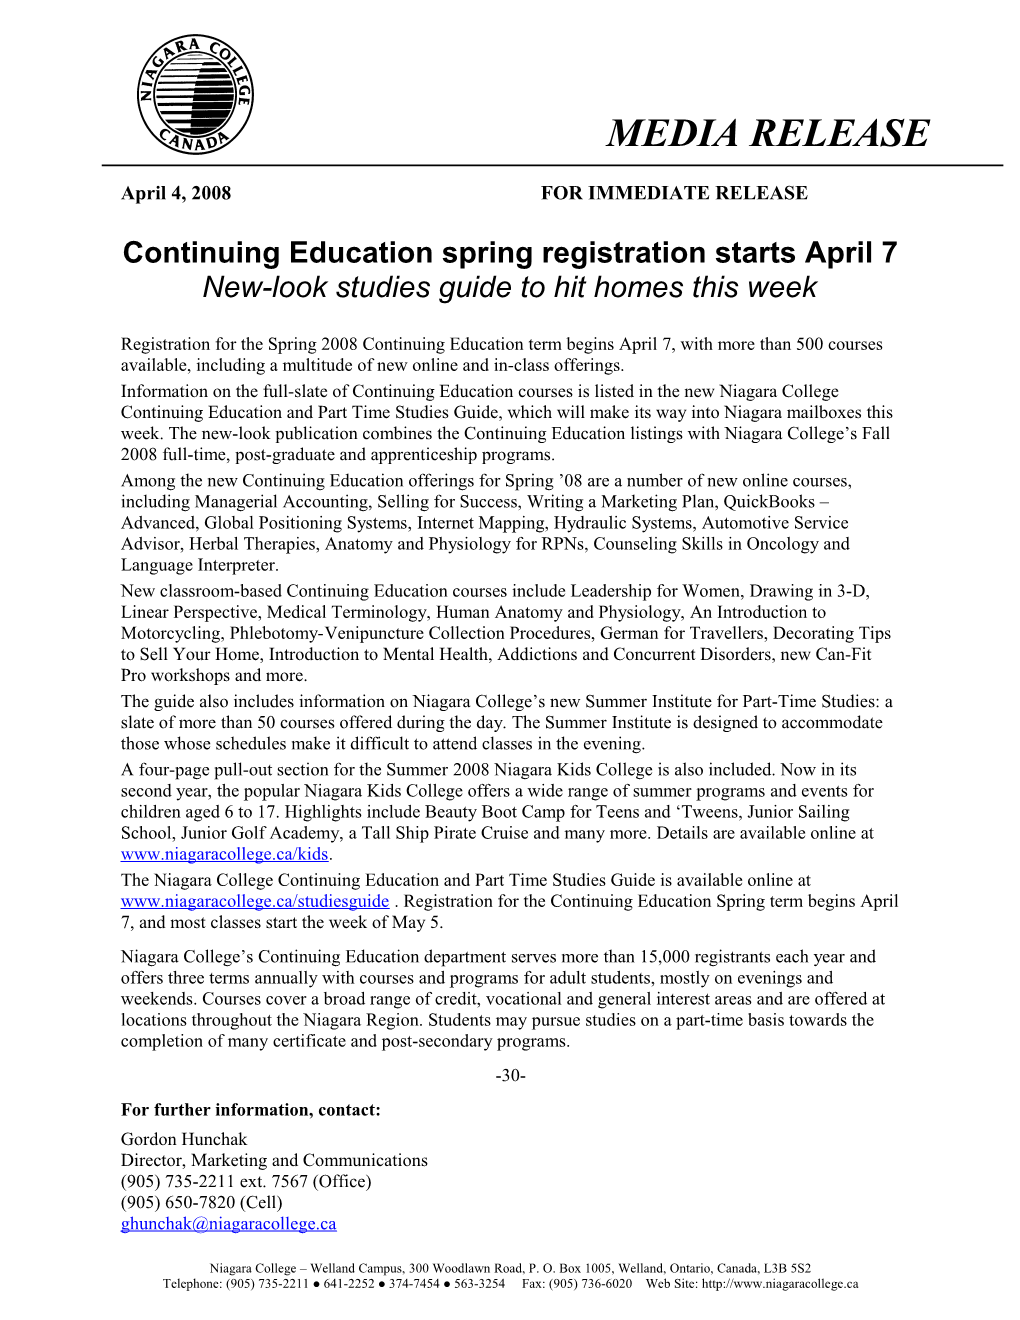 Continuing Education Spring Registration Starts April 7